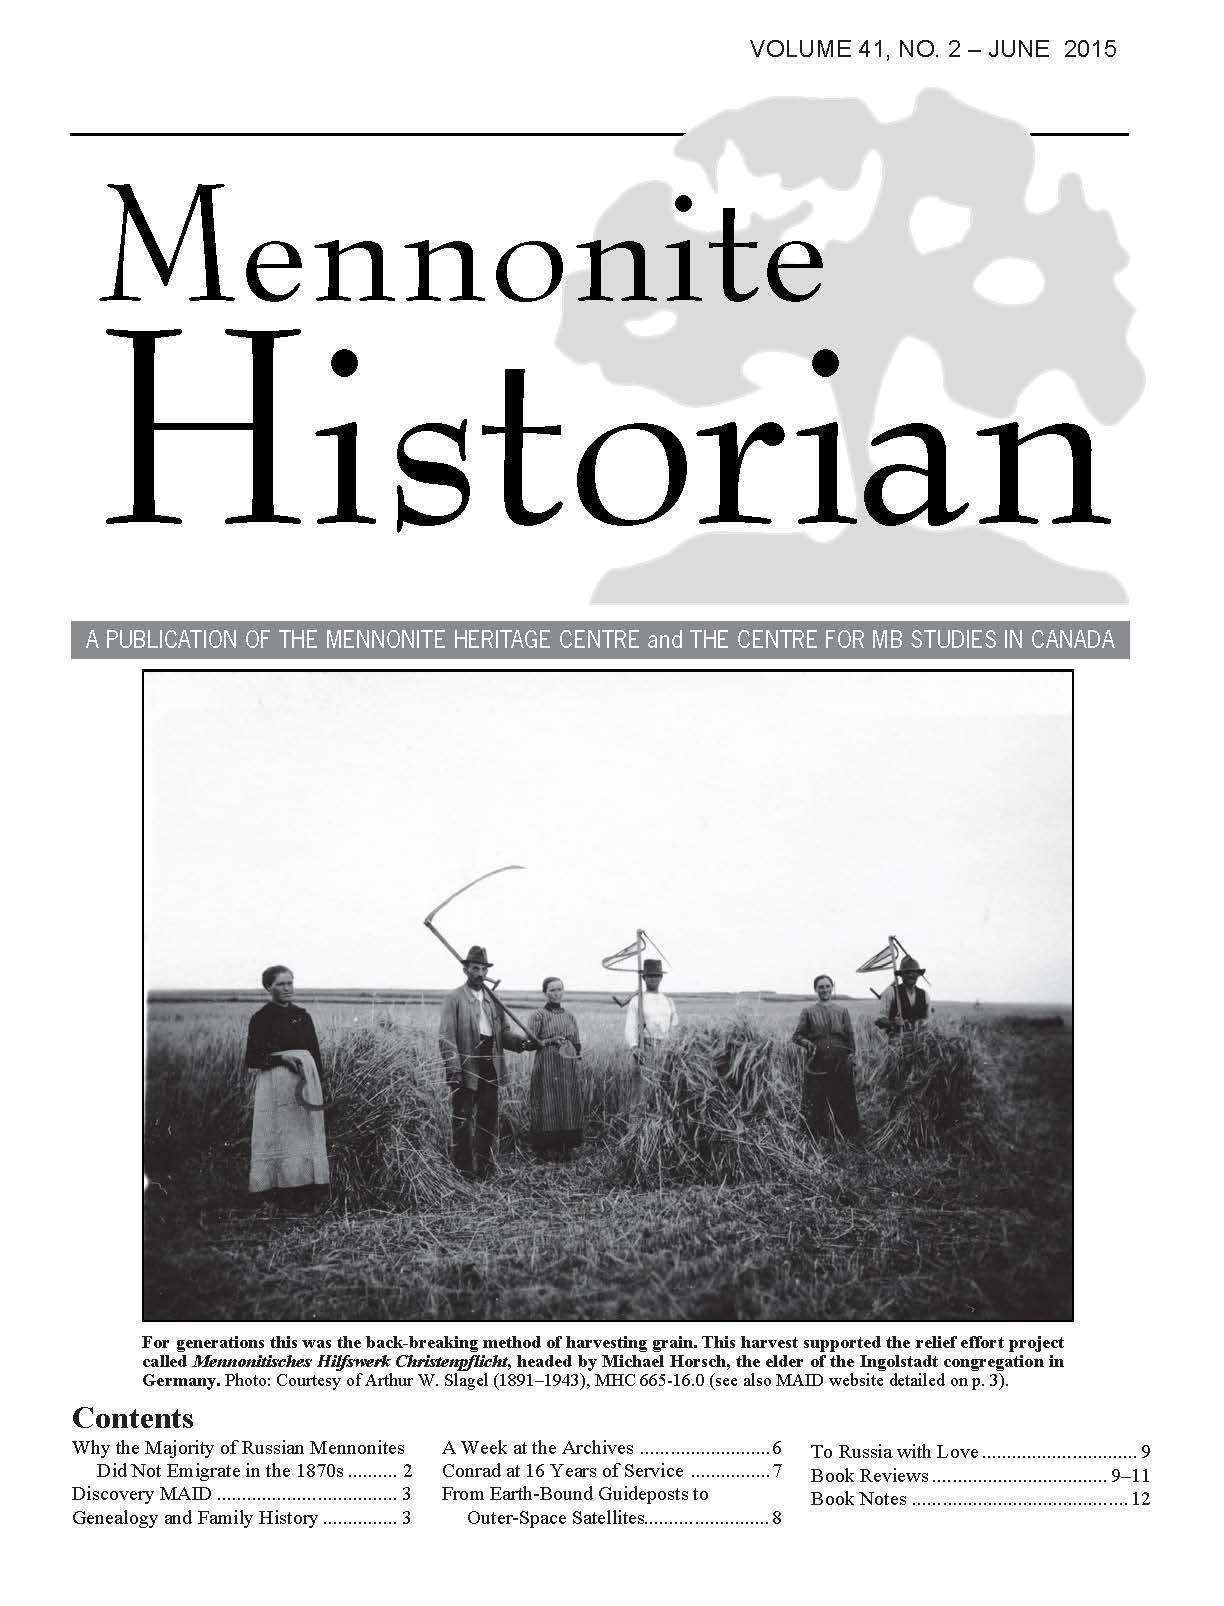 Mennonite Historian (June 2015)